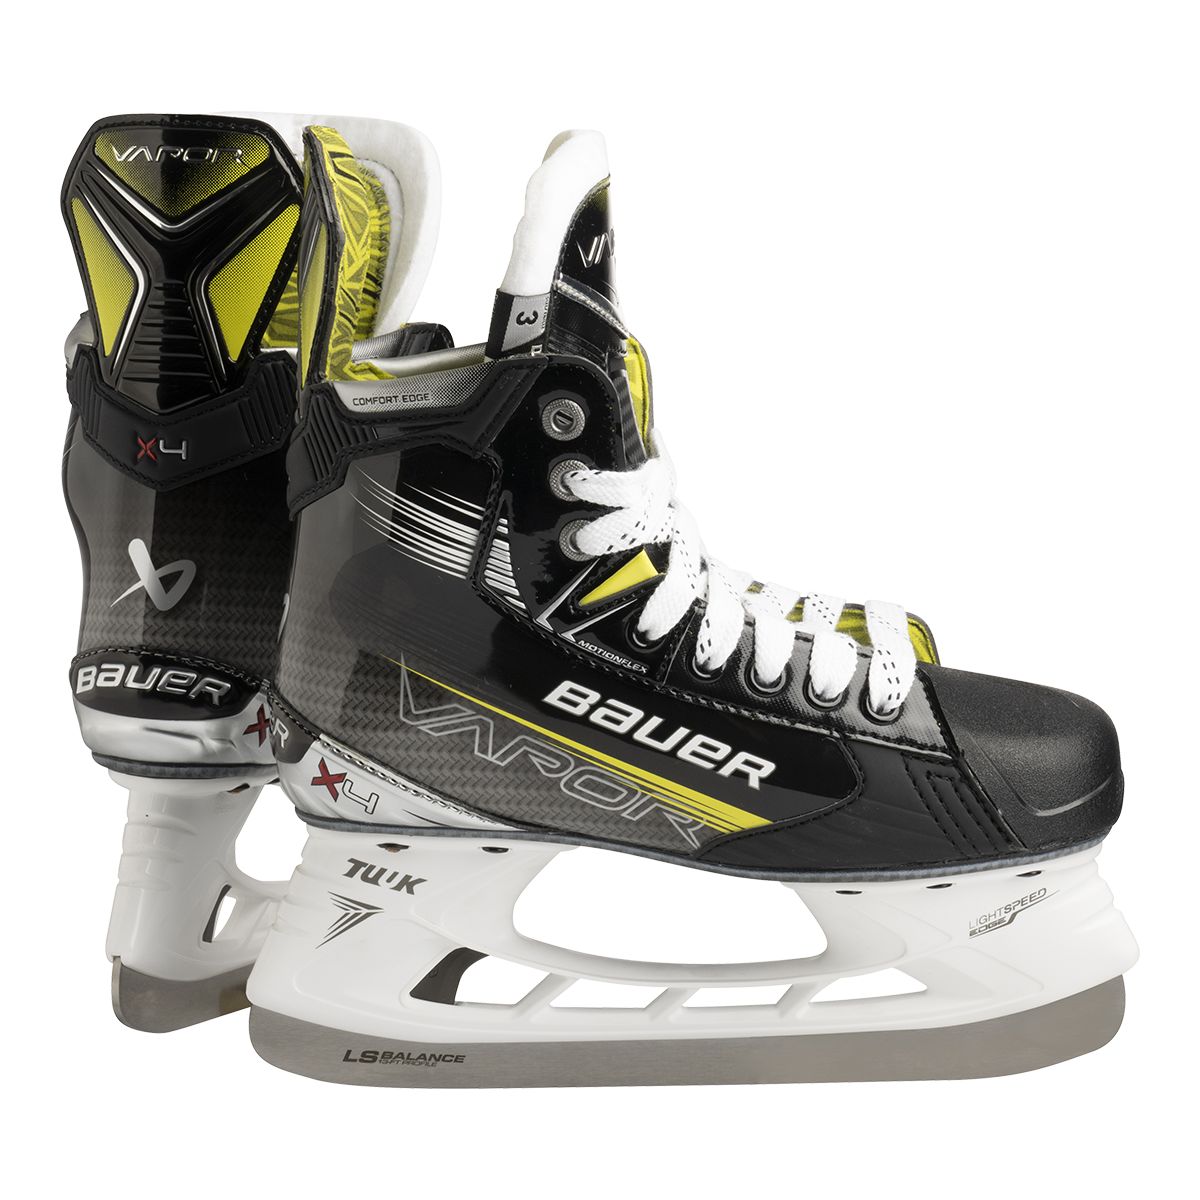 Image of Bauer Vapor X4 Junior Hockey Skates